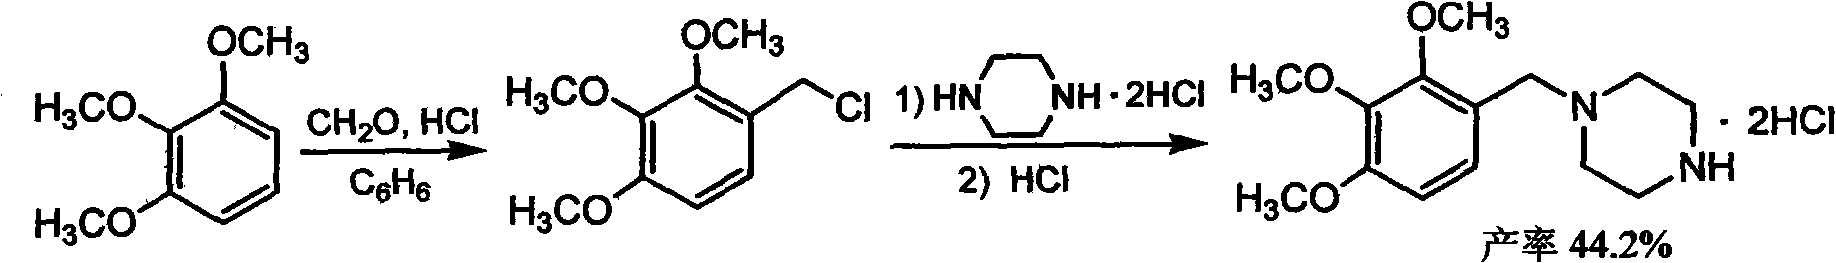 Production method of trimetazidine and its hydrochloride